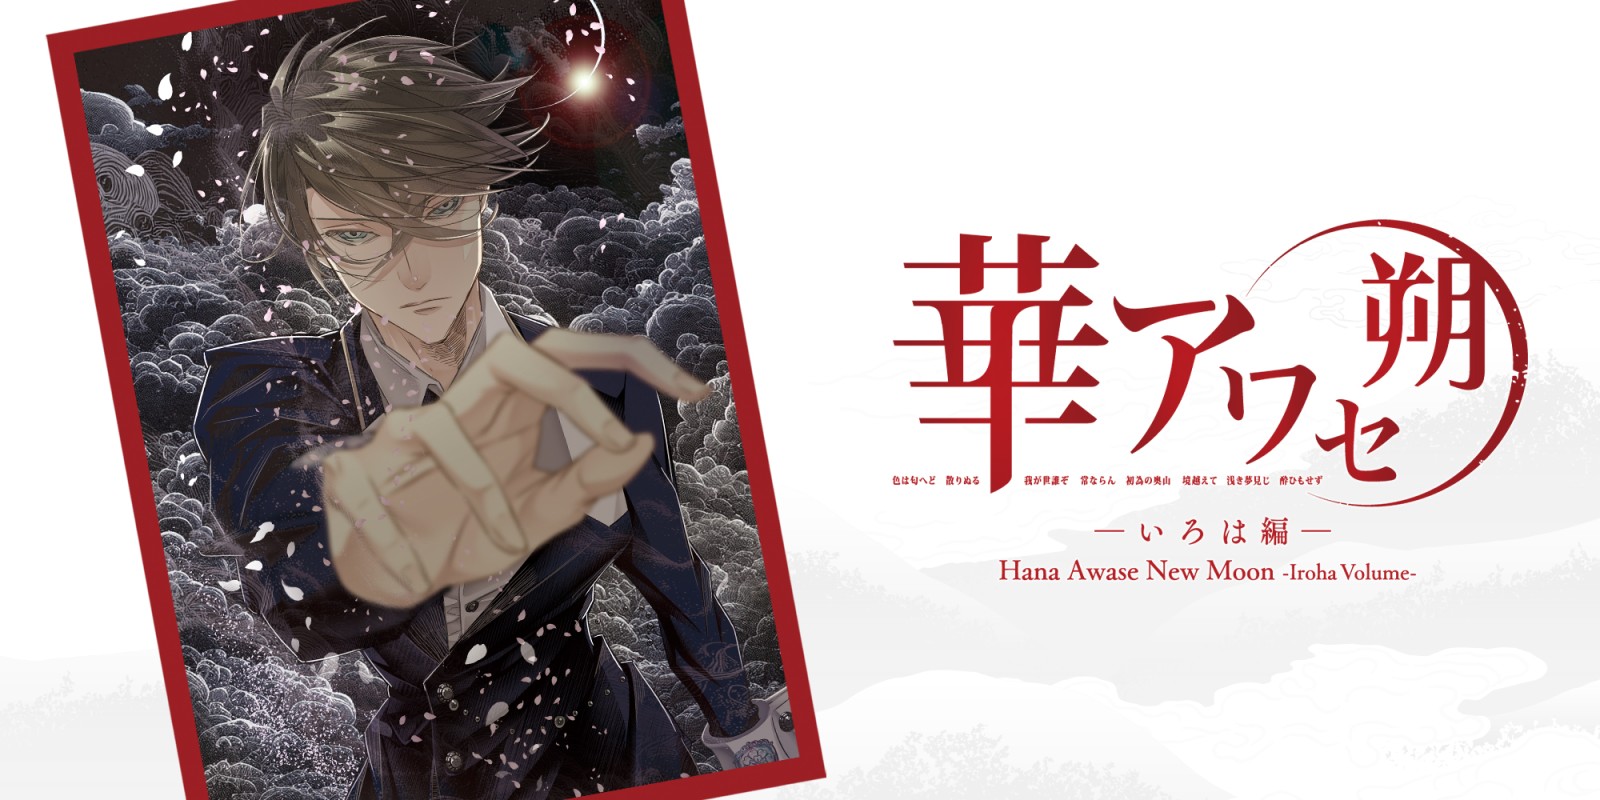 Hana Awase New Moon -Iroha Volume-